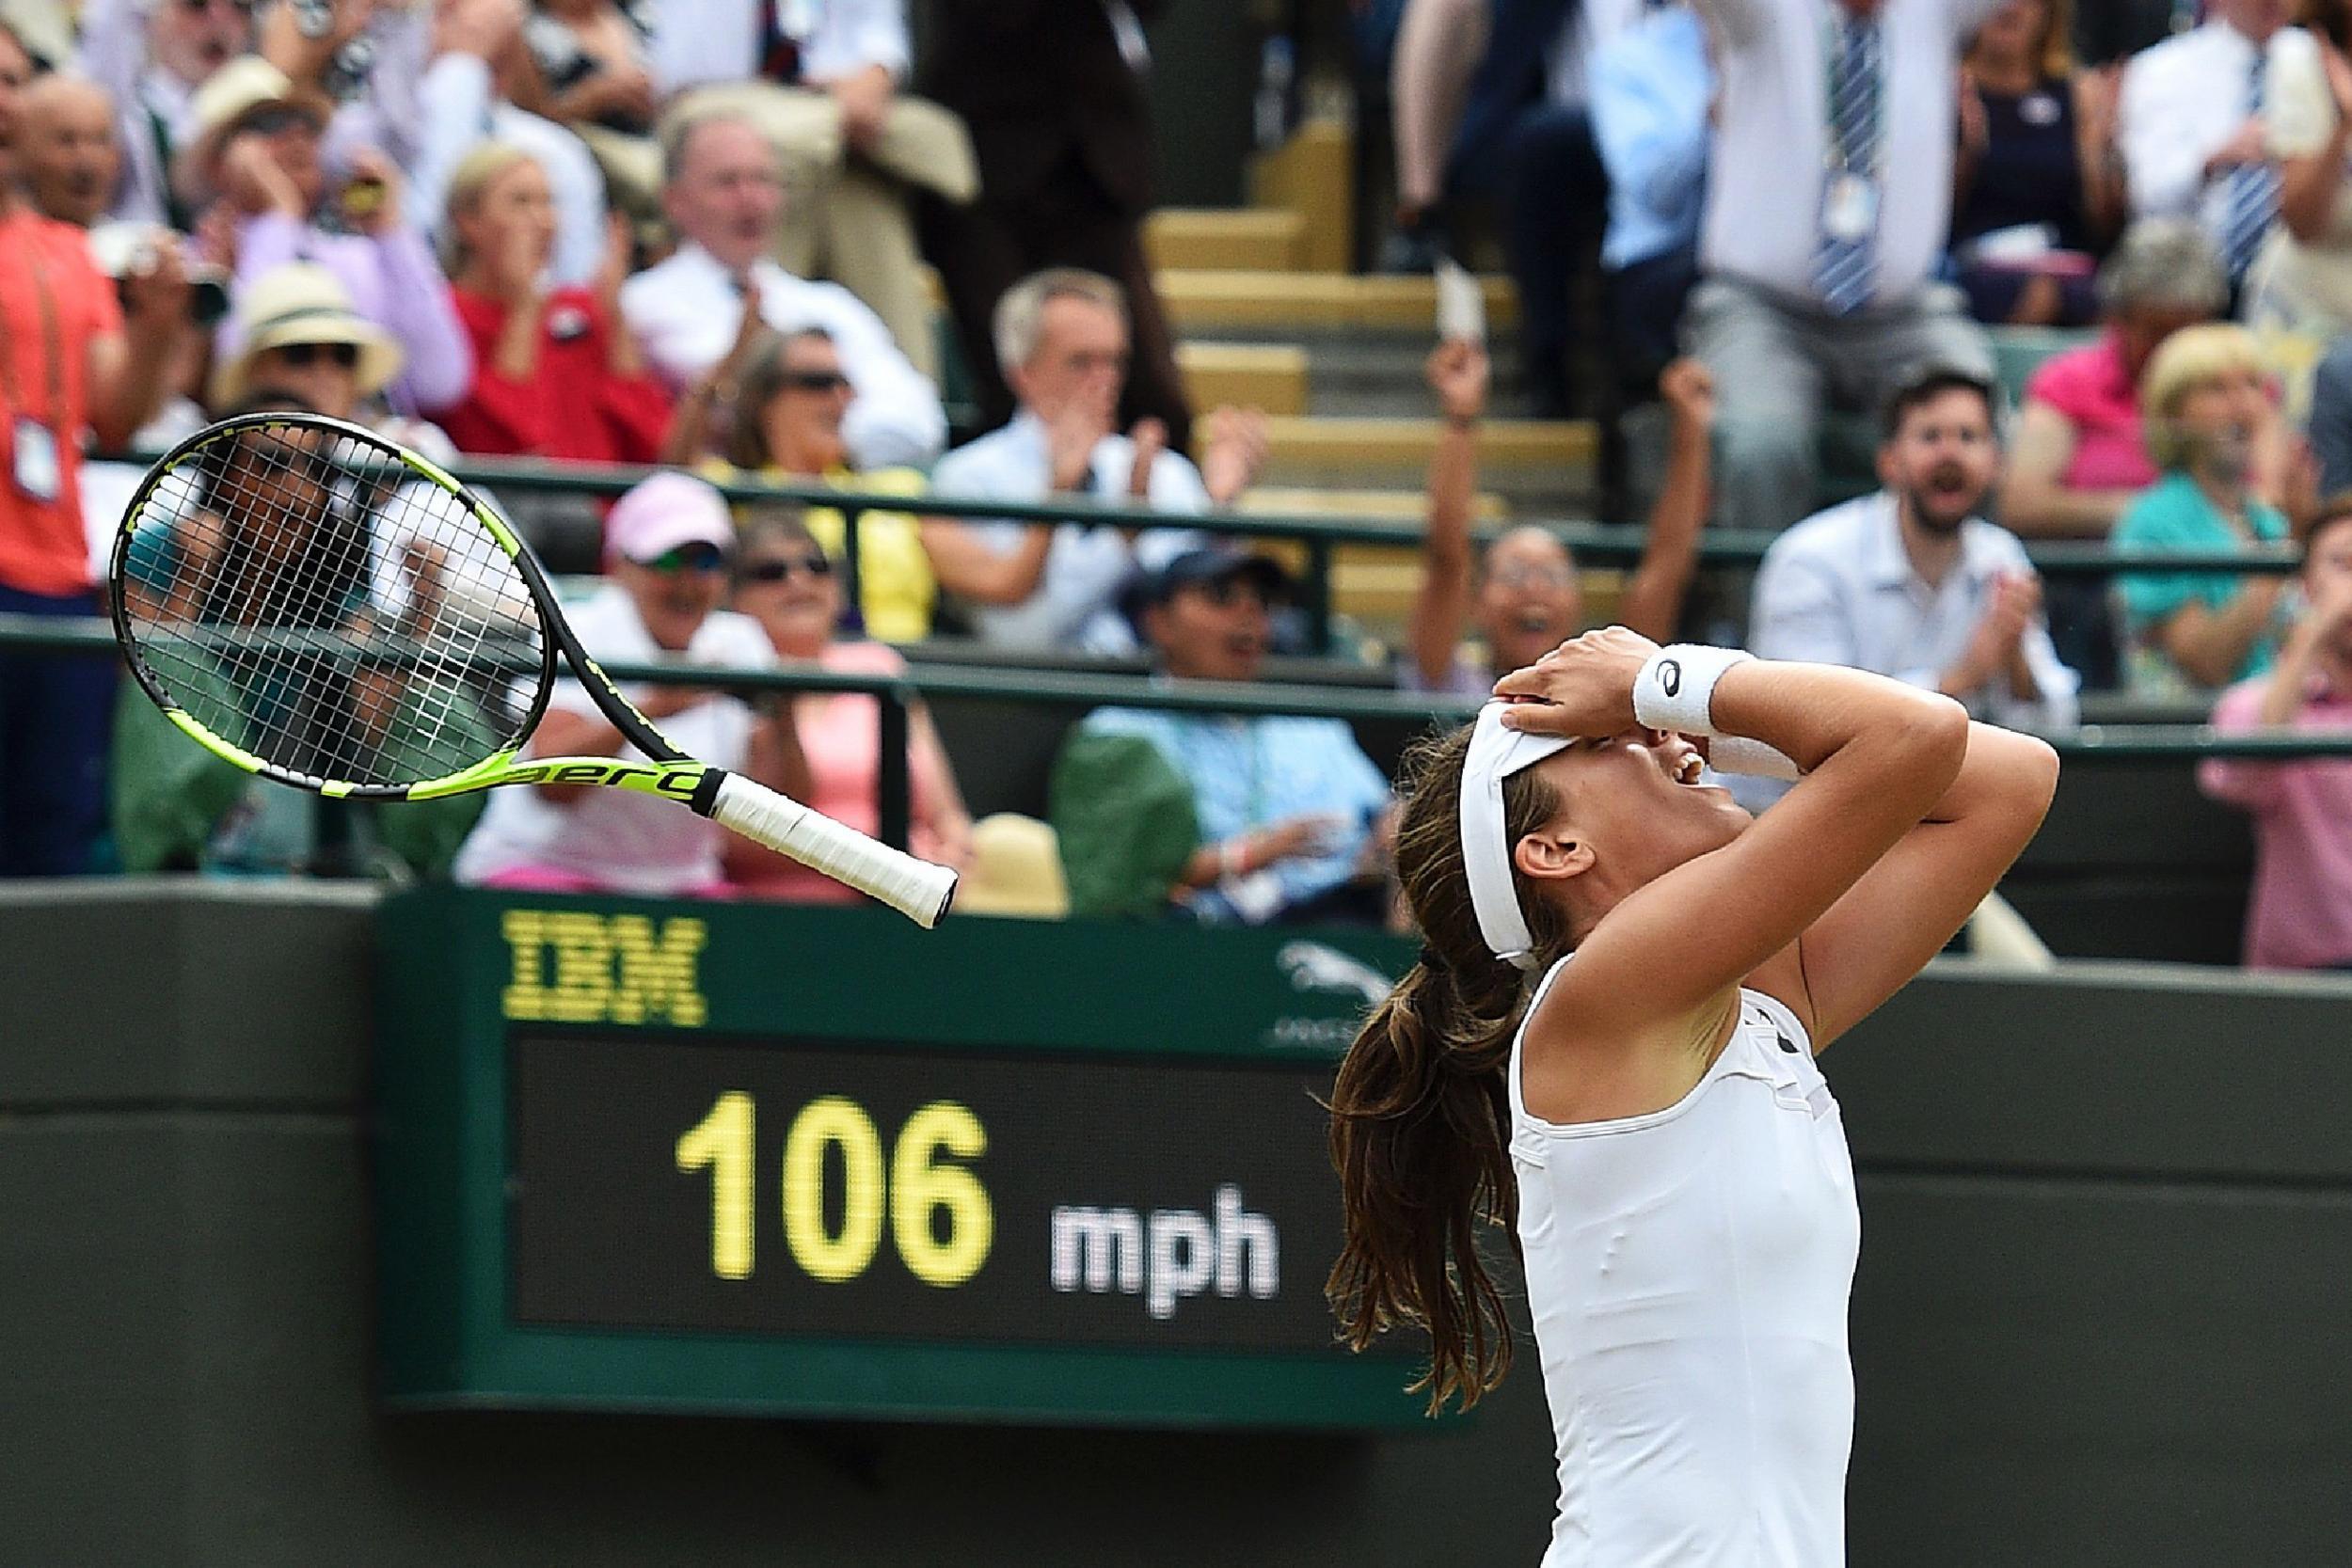 Jo Konta also found herself in the quarter-finals at Wimbledon